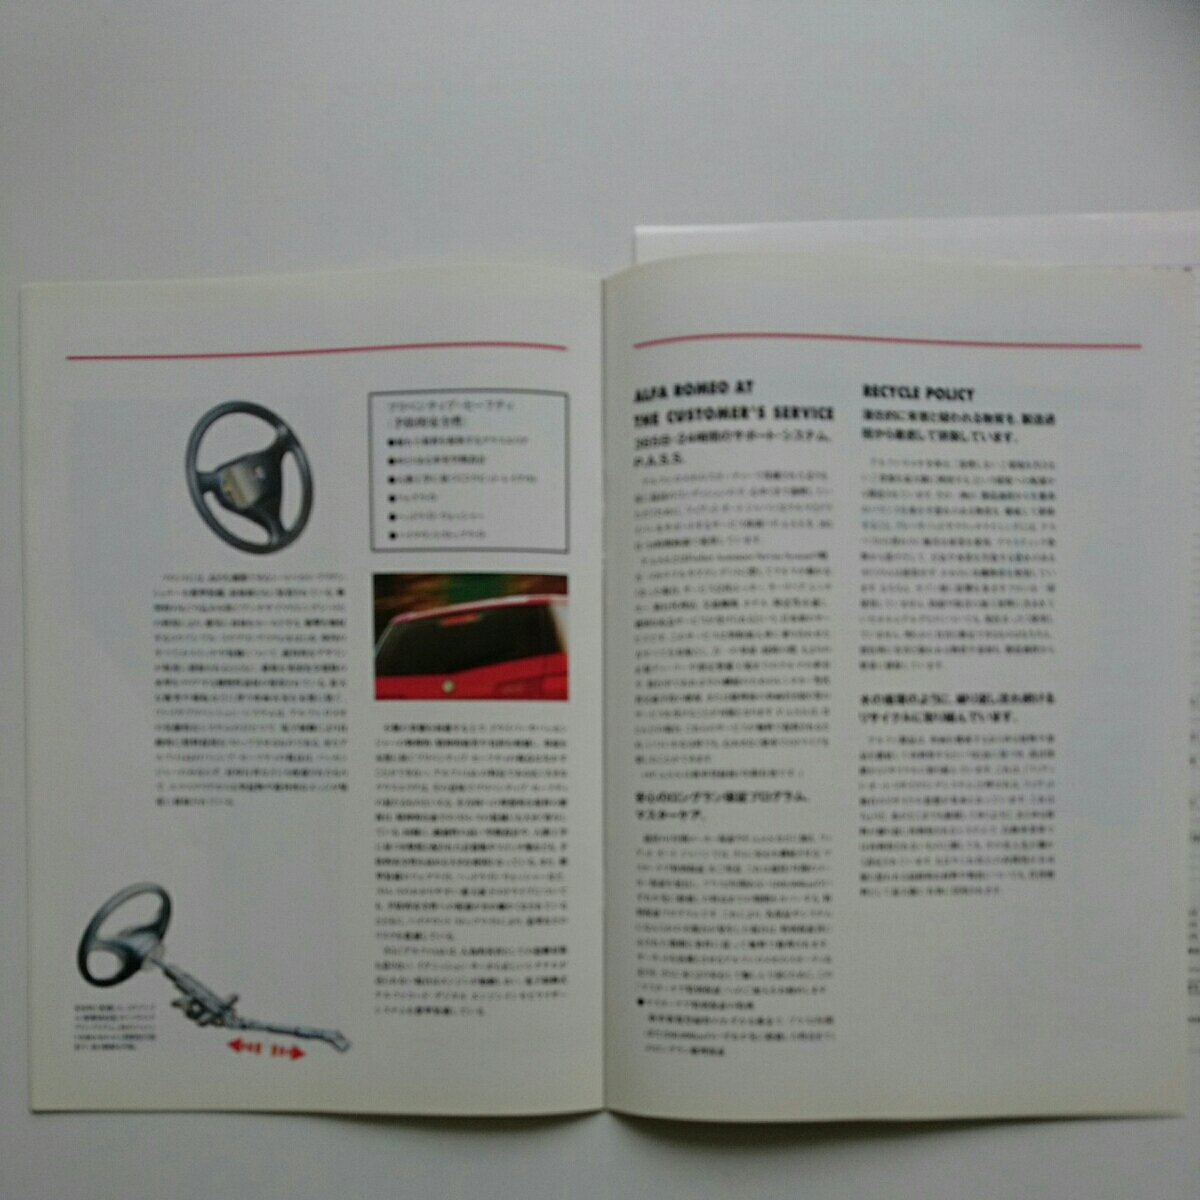  Alpha Romeo Alpha 145 quadrifoglio 1998 год модели 14 страница + таблица цен не прочитан товар редкий распроданный машина 